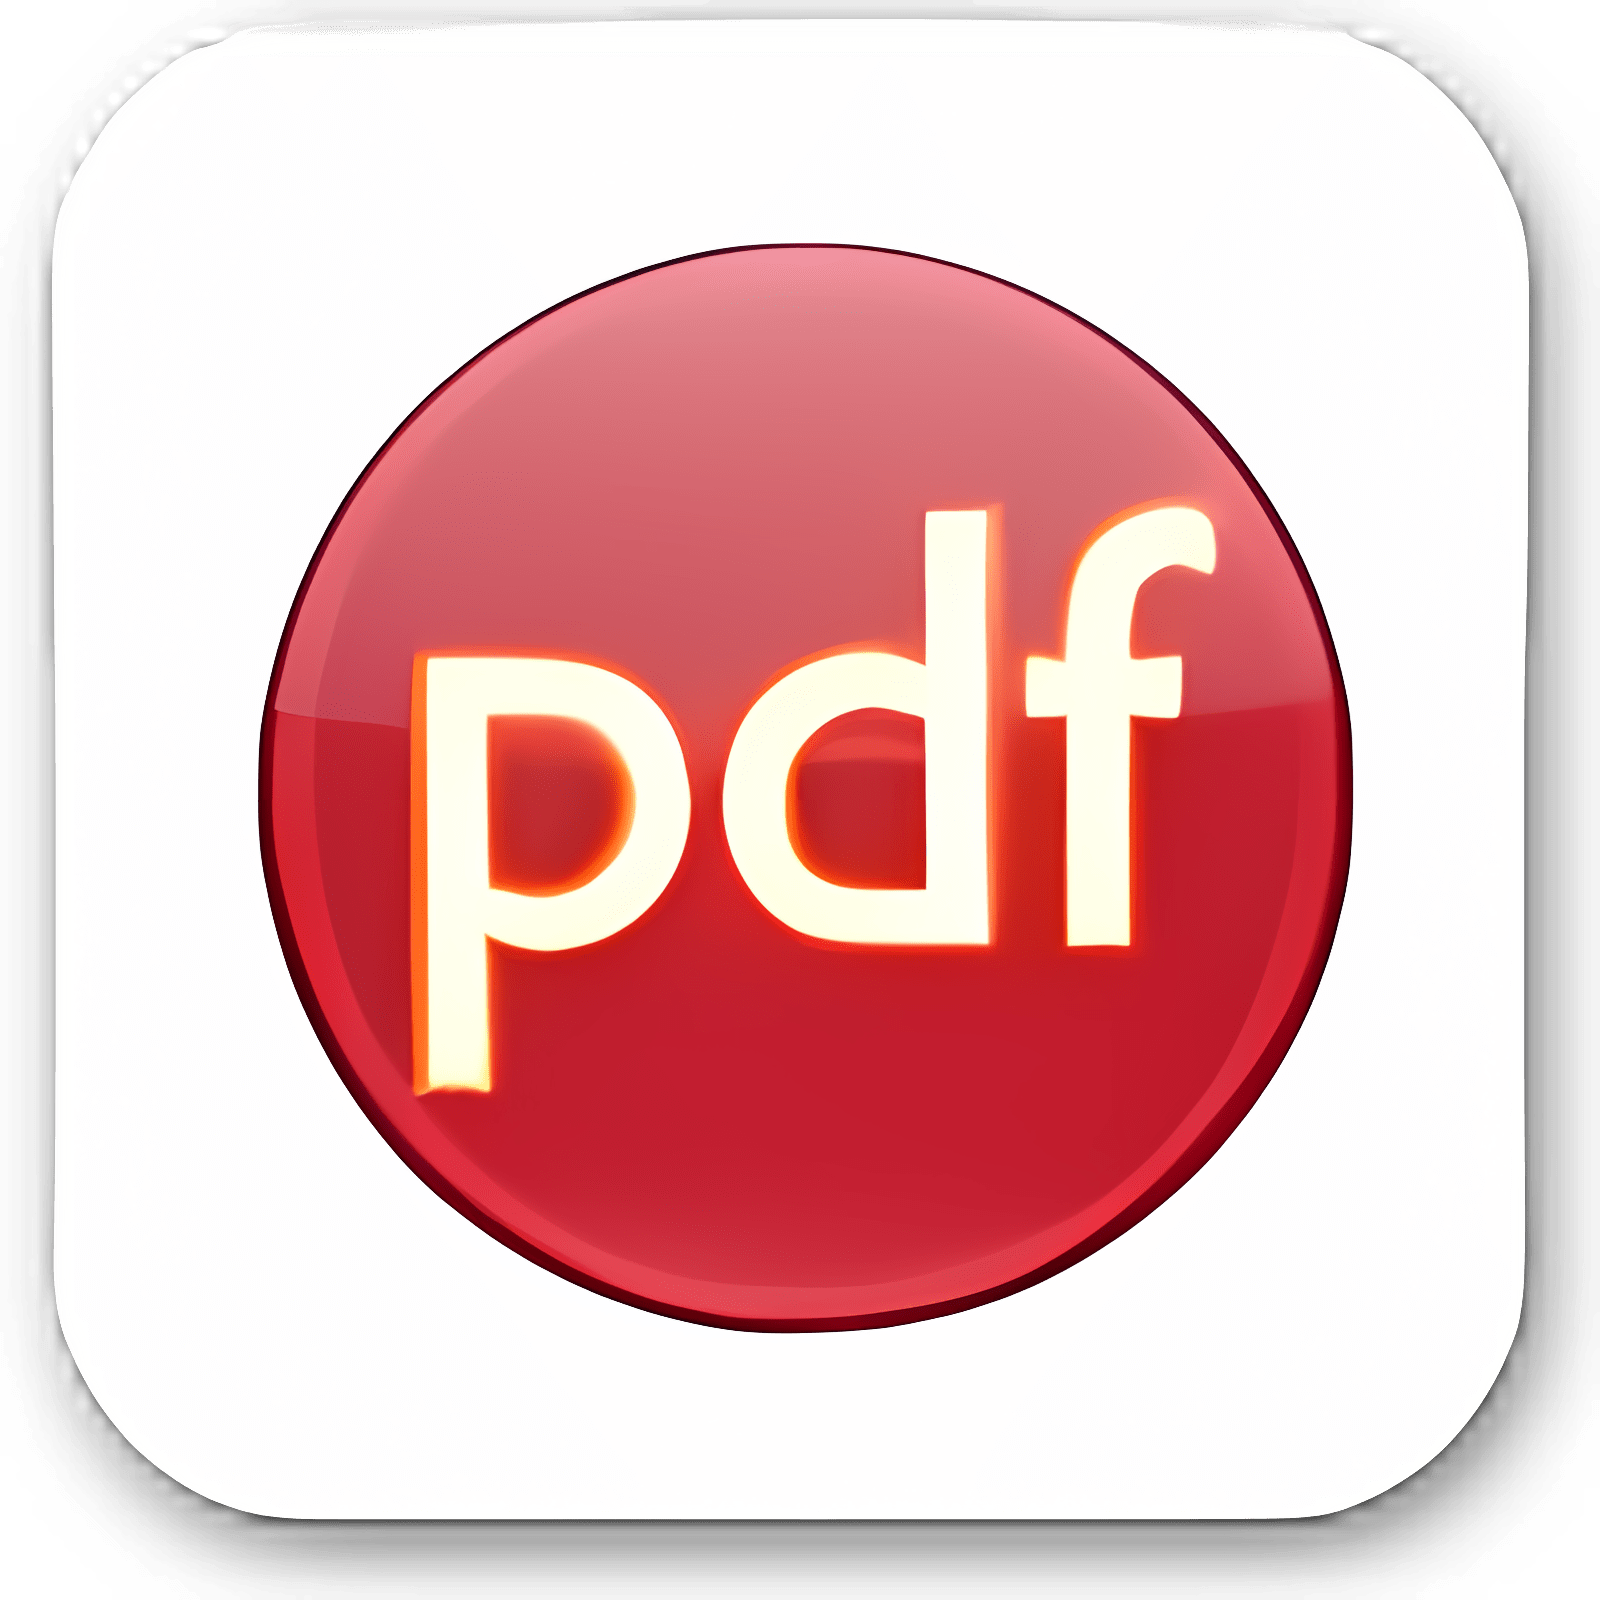 free downloads pdfFactory Pro 8.40